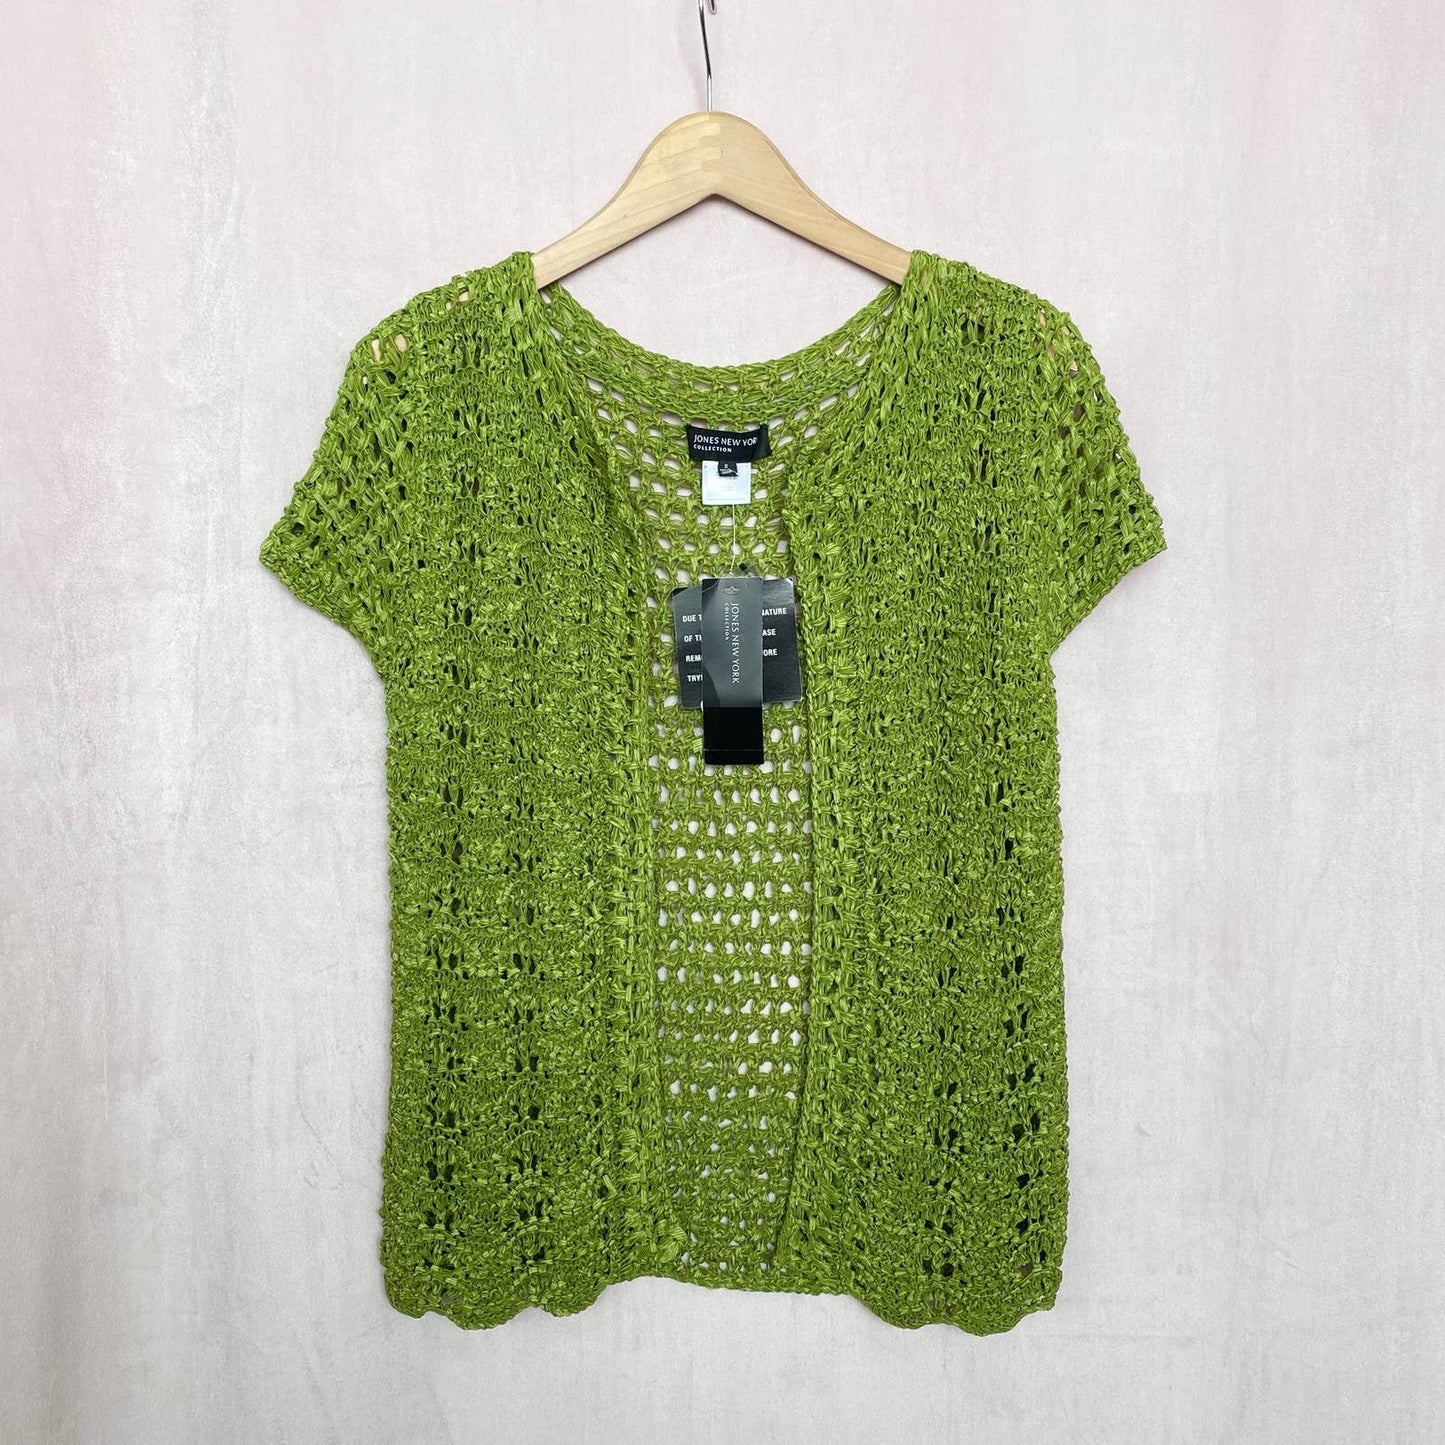 Preowned Jones New York Green Crochet Short Sleeve Sweater, Size Small